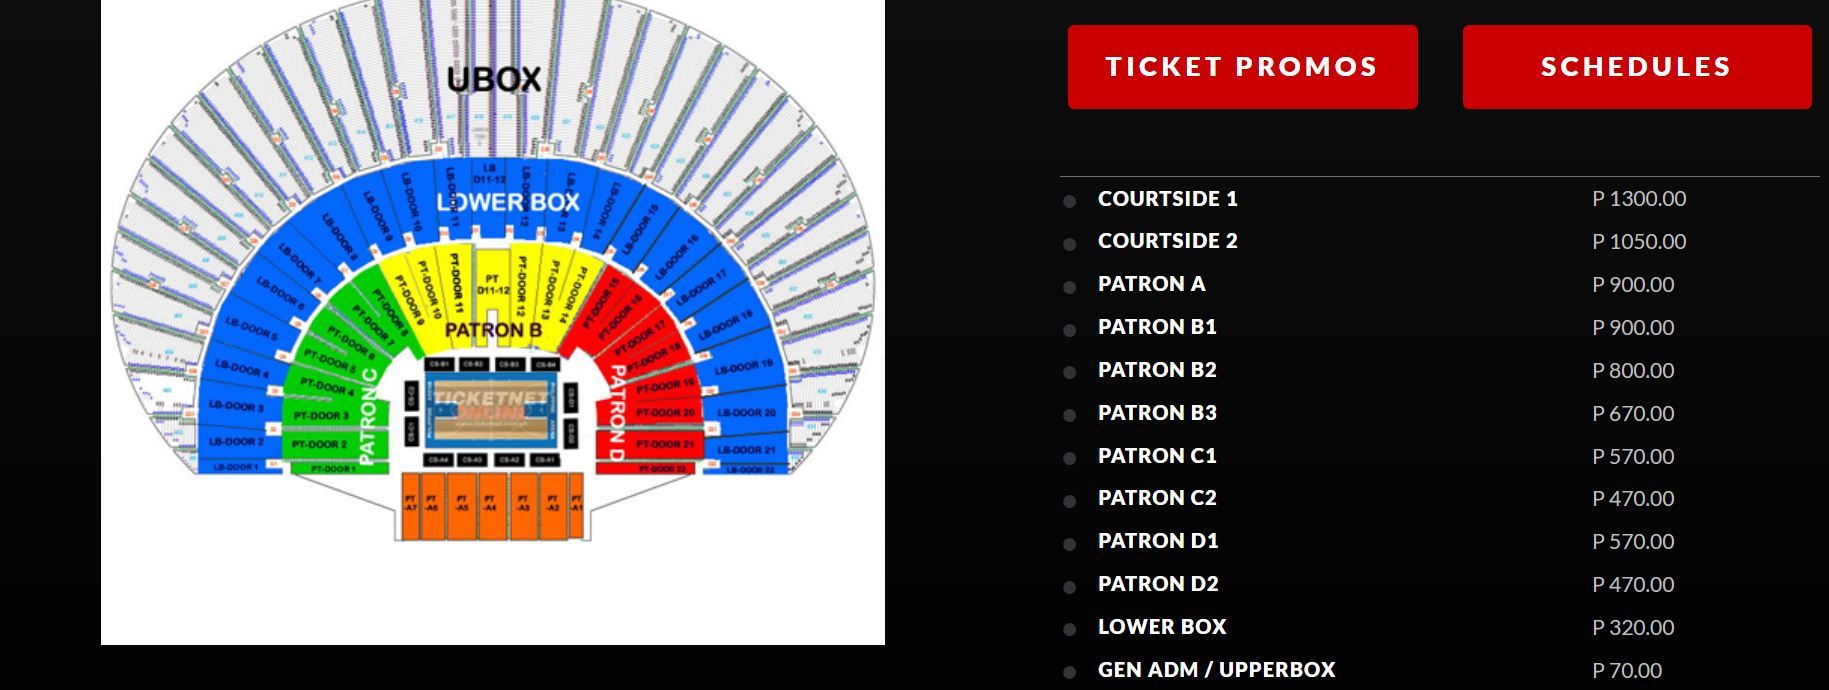 Philippine Arena ticket prices